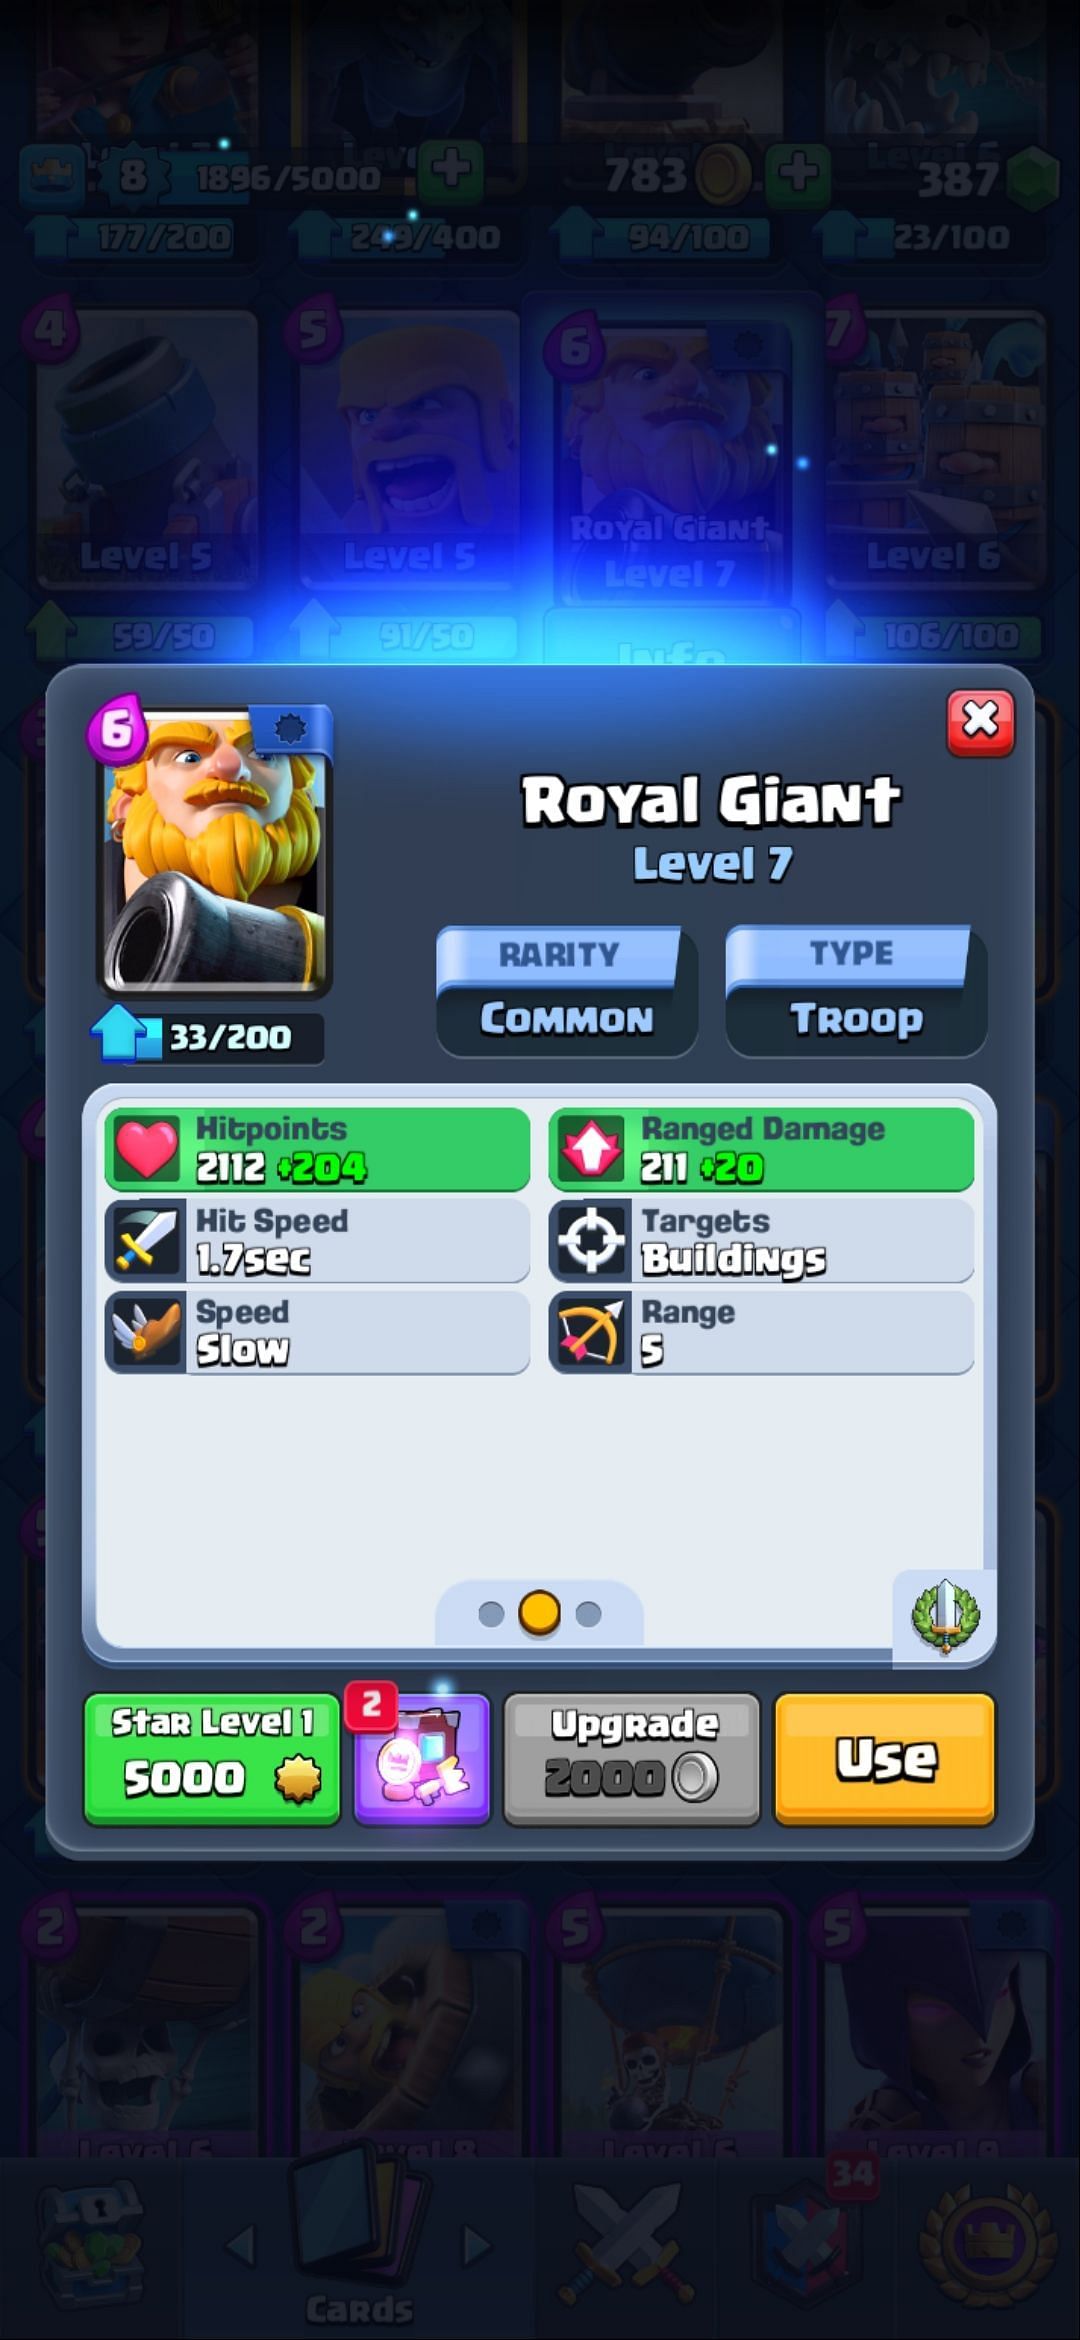 The Royal Giant in Clash Royale (Image via Sportskeeda)